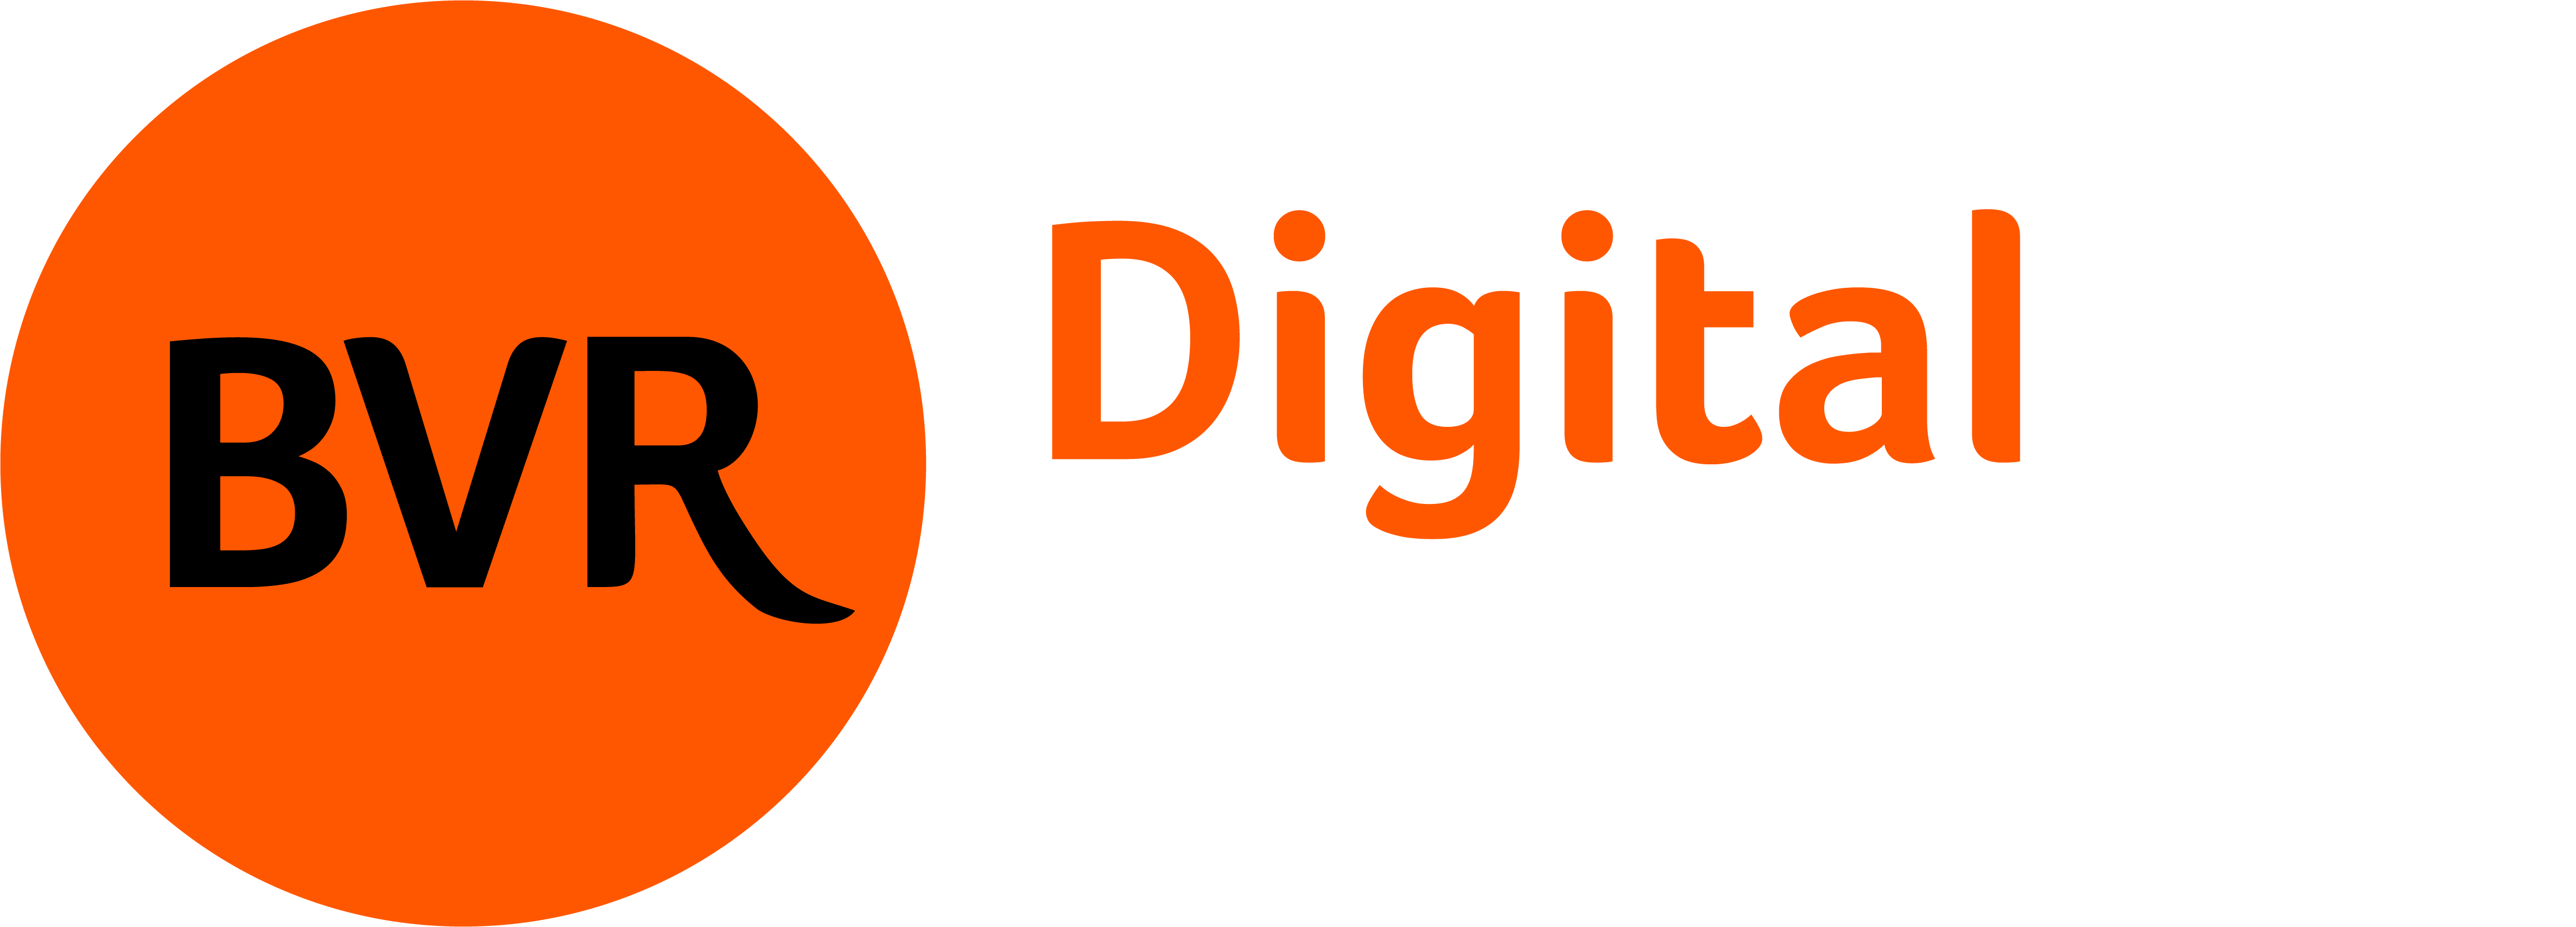 BVR Digital